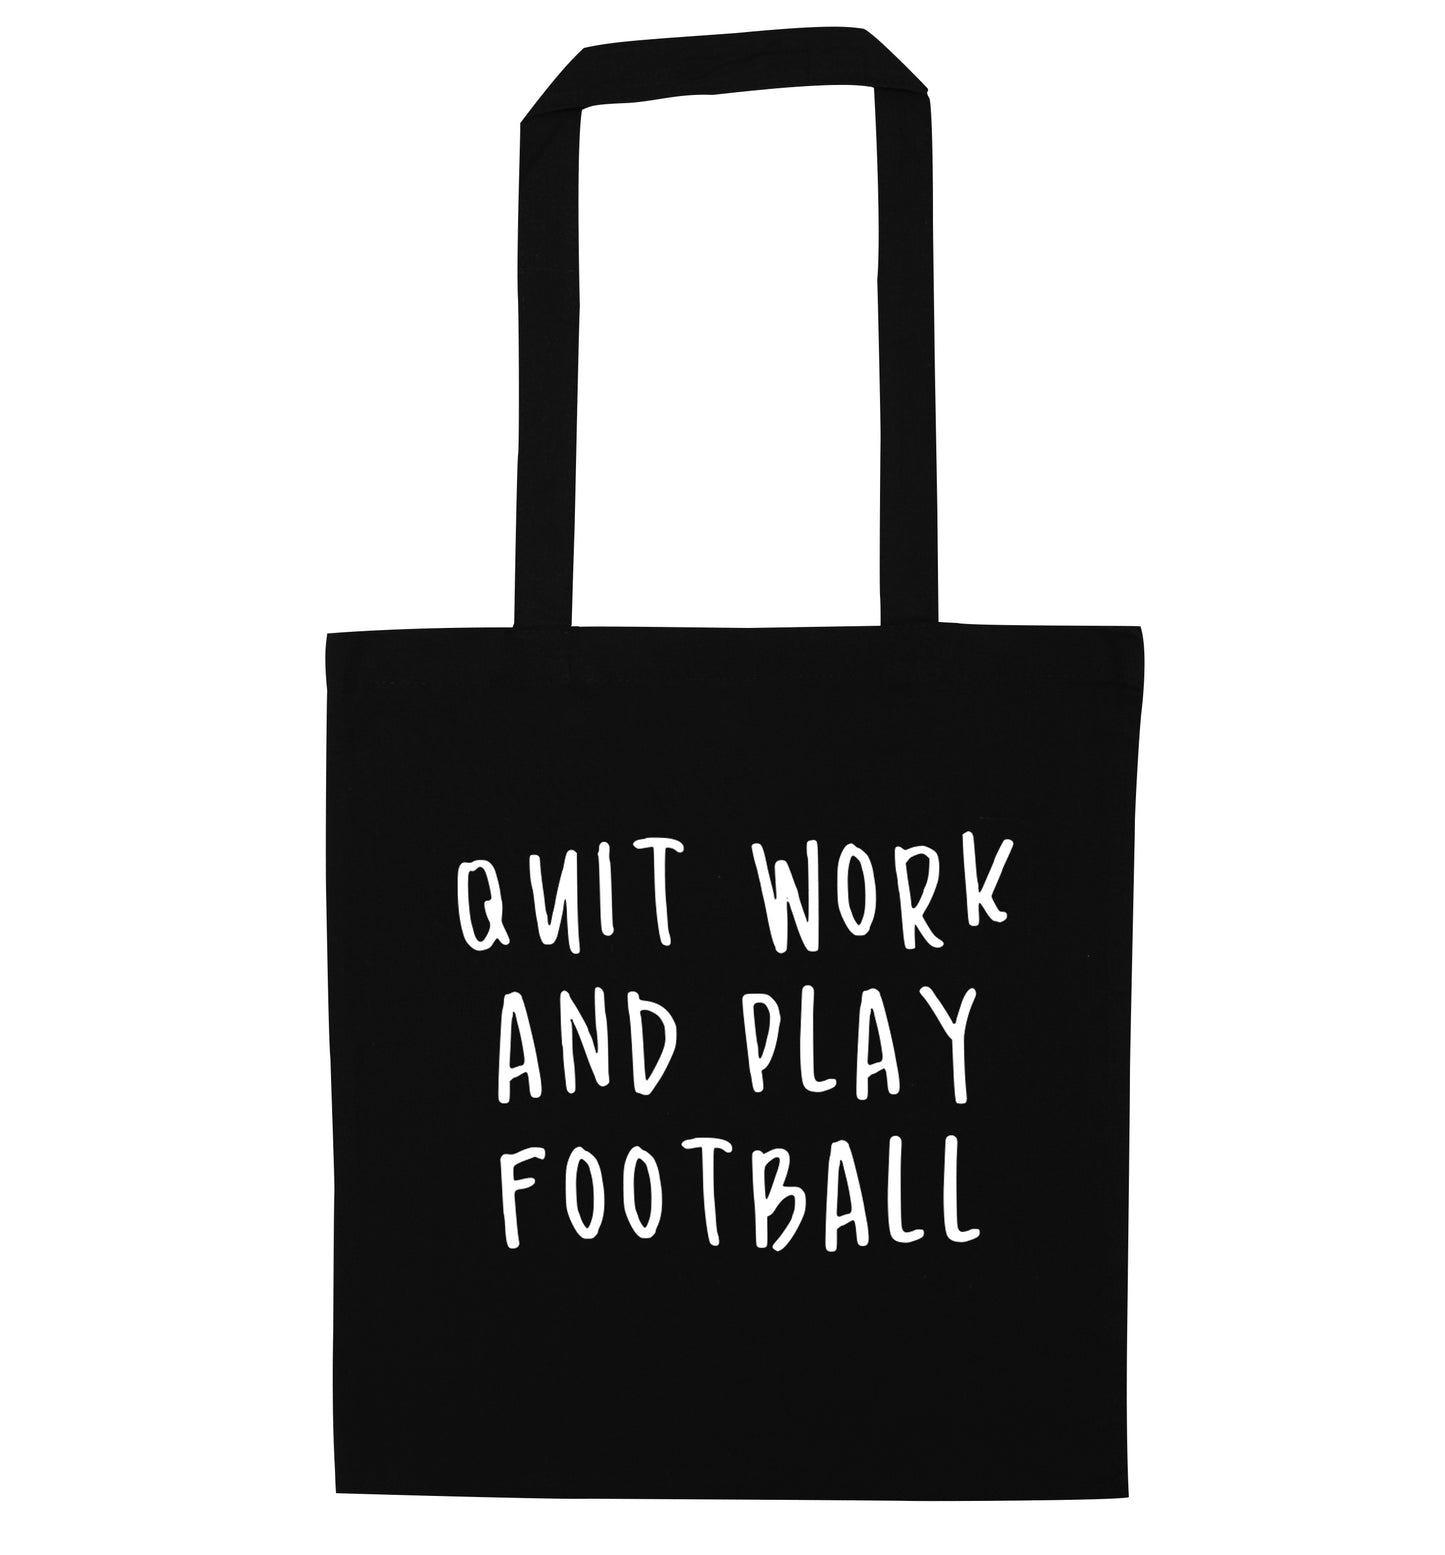 Quit work play football black tote bag